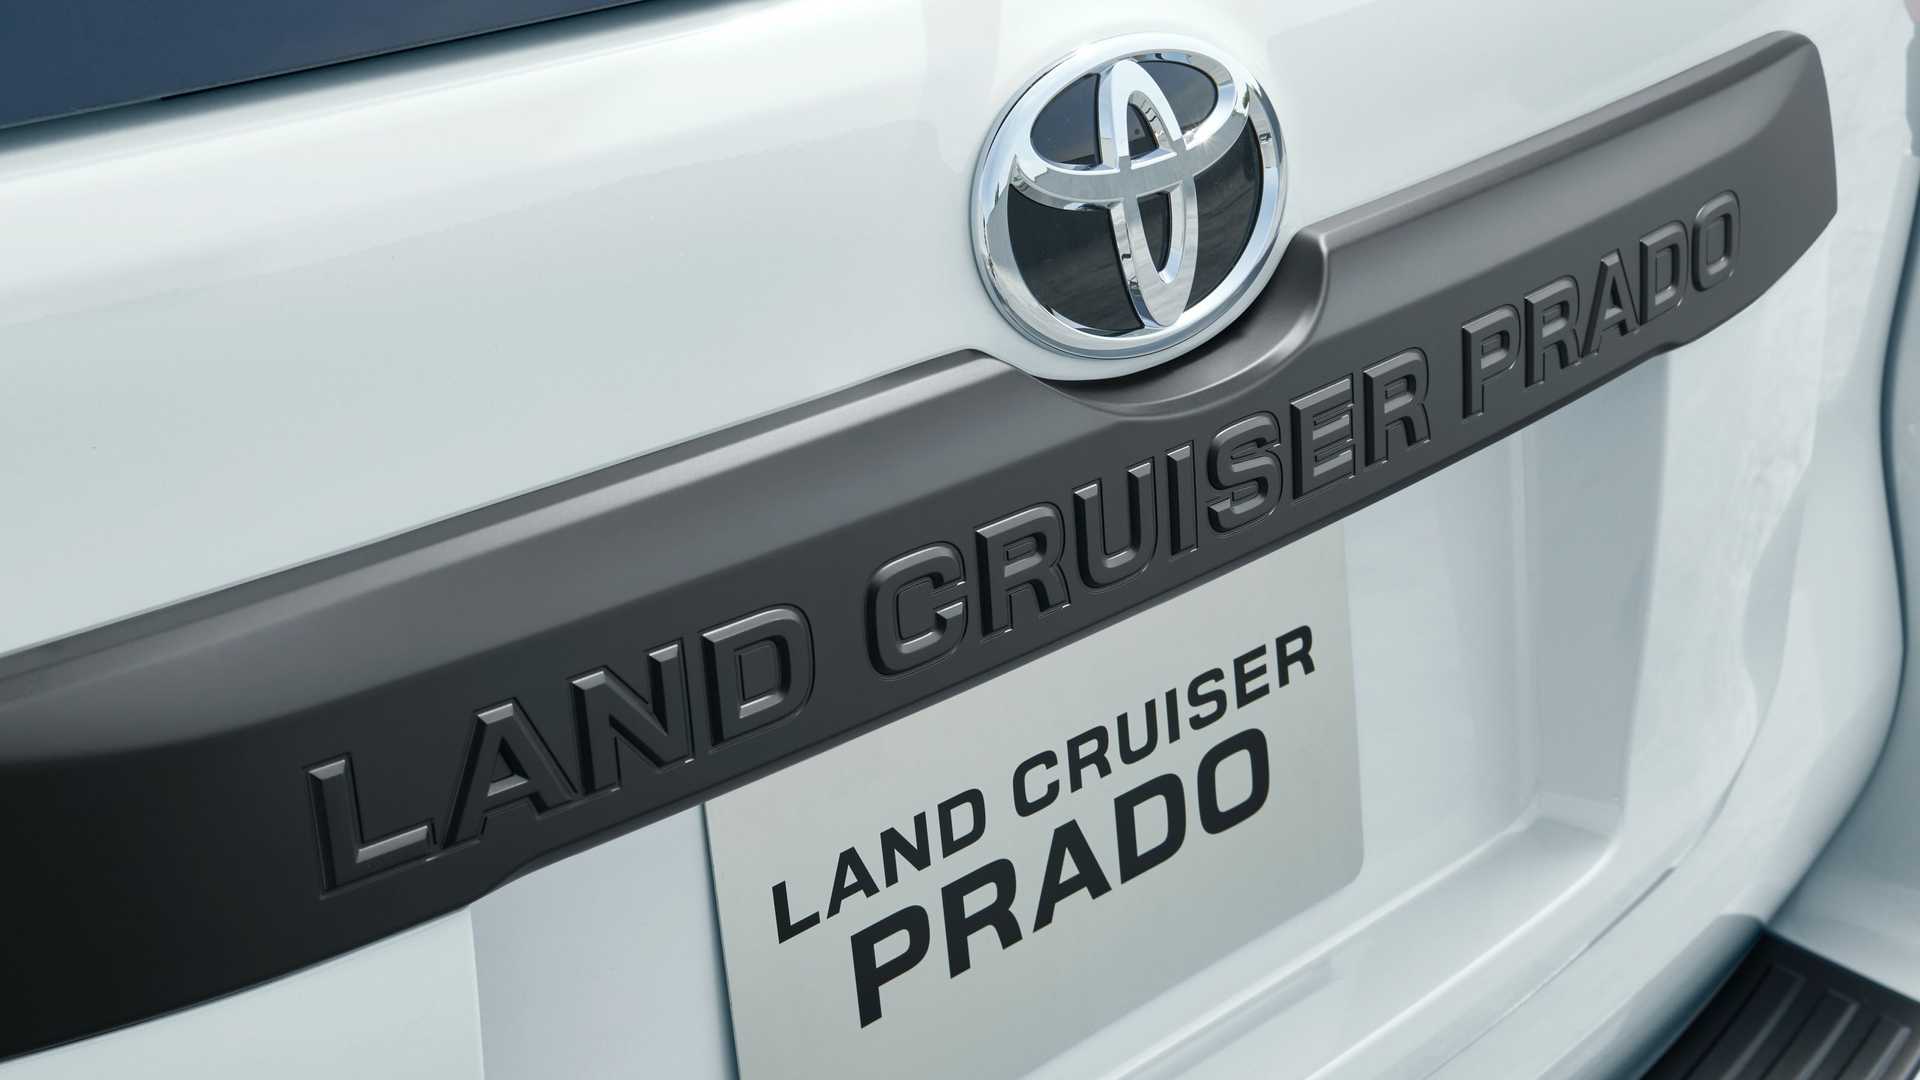 Toyota Land Cruiser Prado Matte Black Edition chốt giá từ 32.662 USD toyota-land-cruiser-prado-matte-black-edition-7.jpg